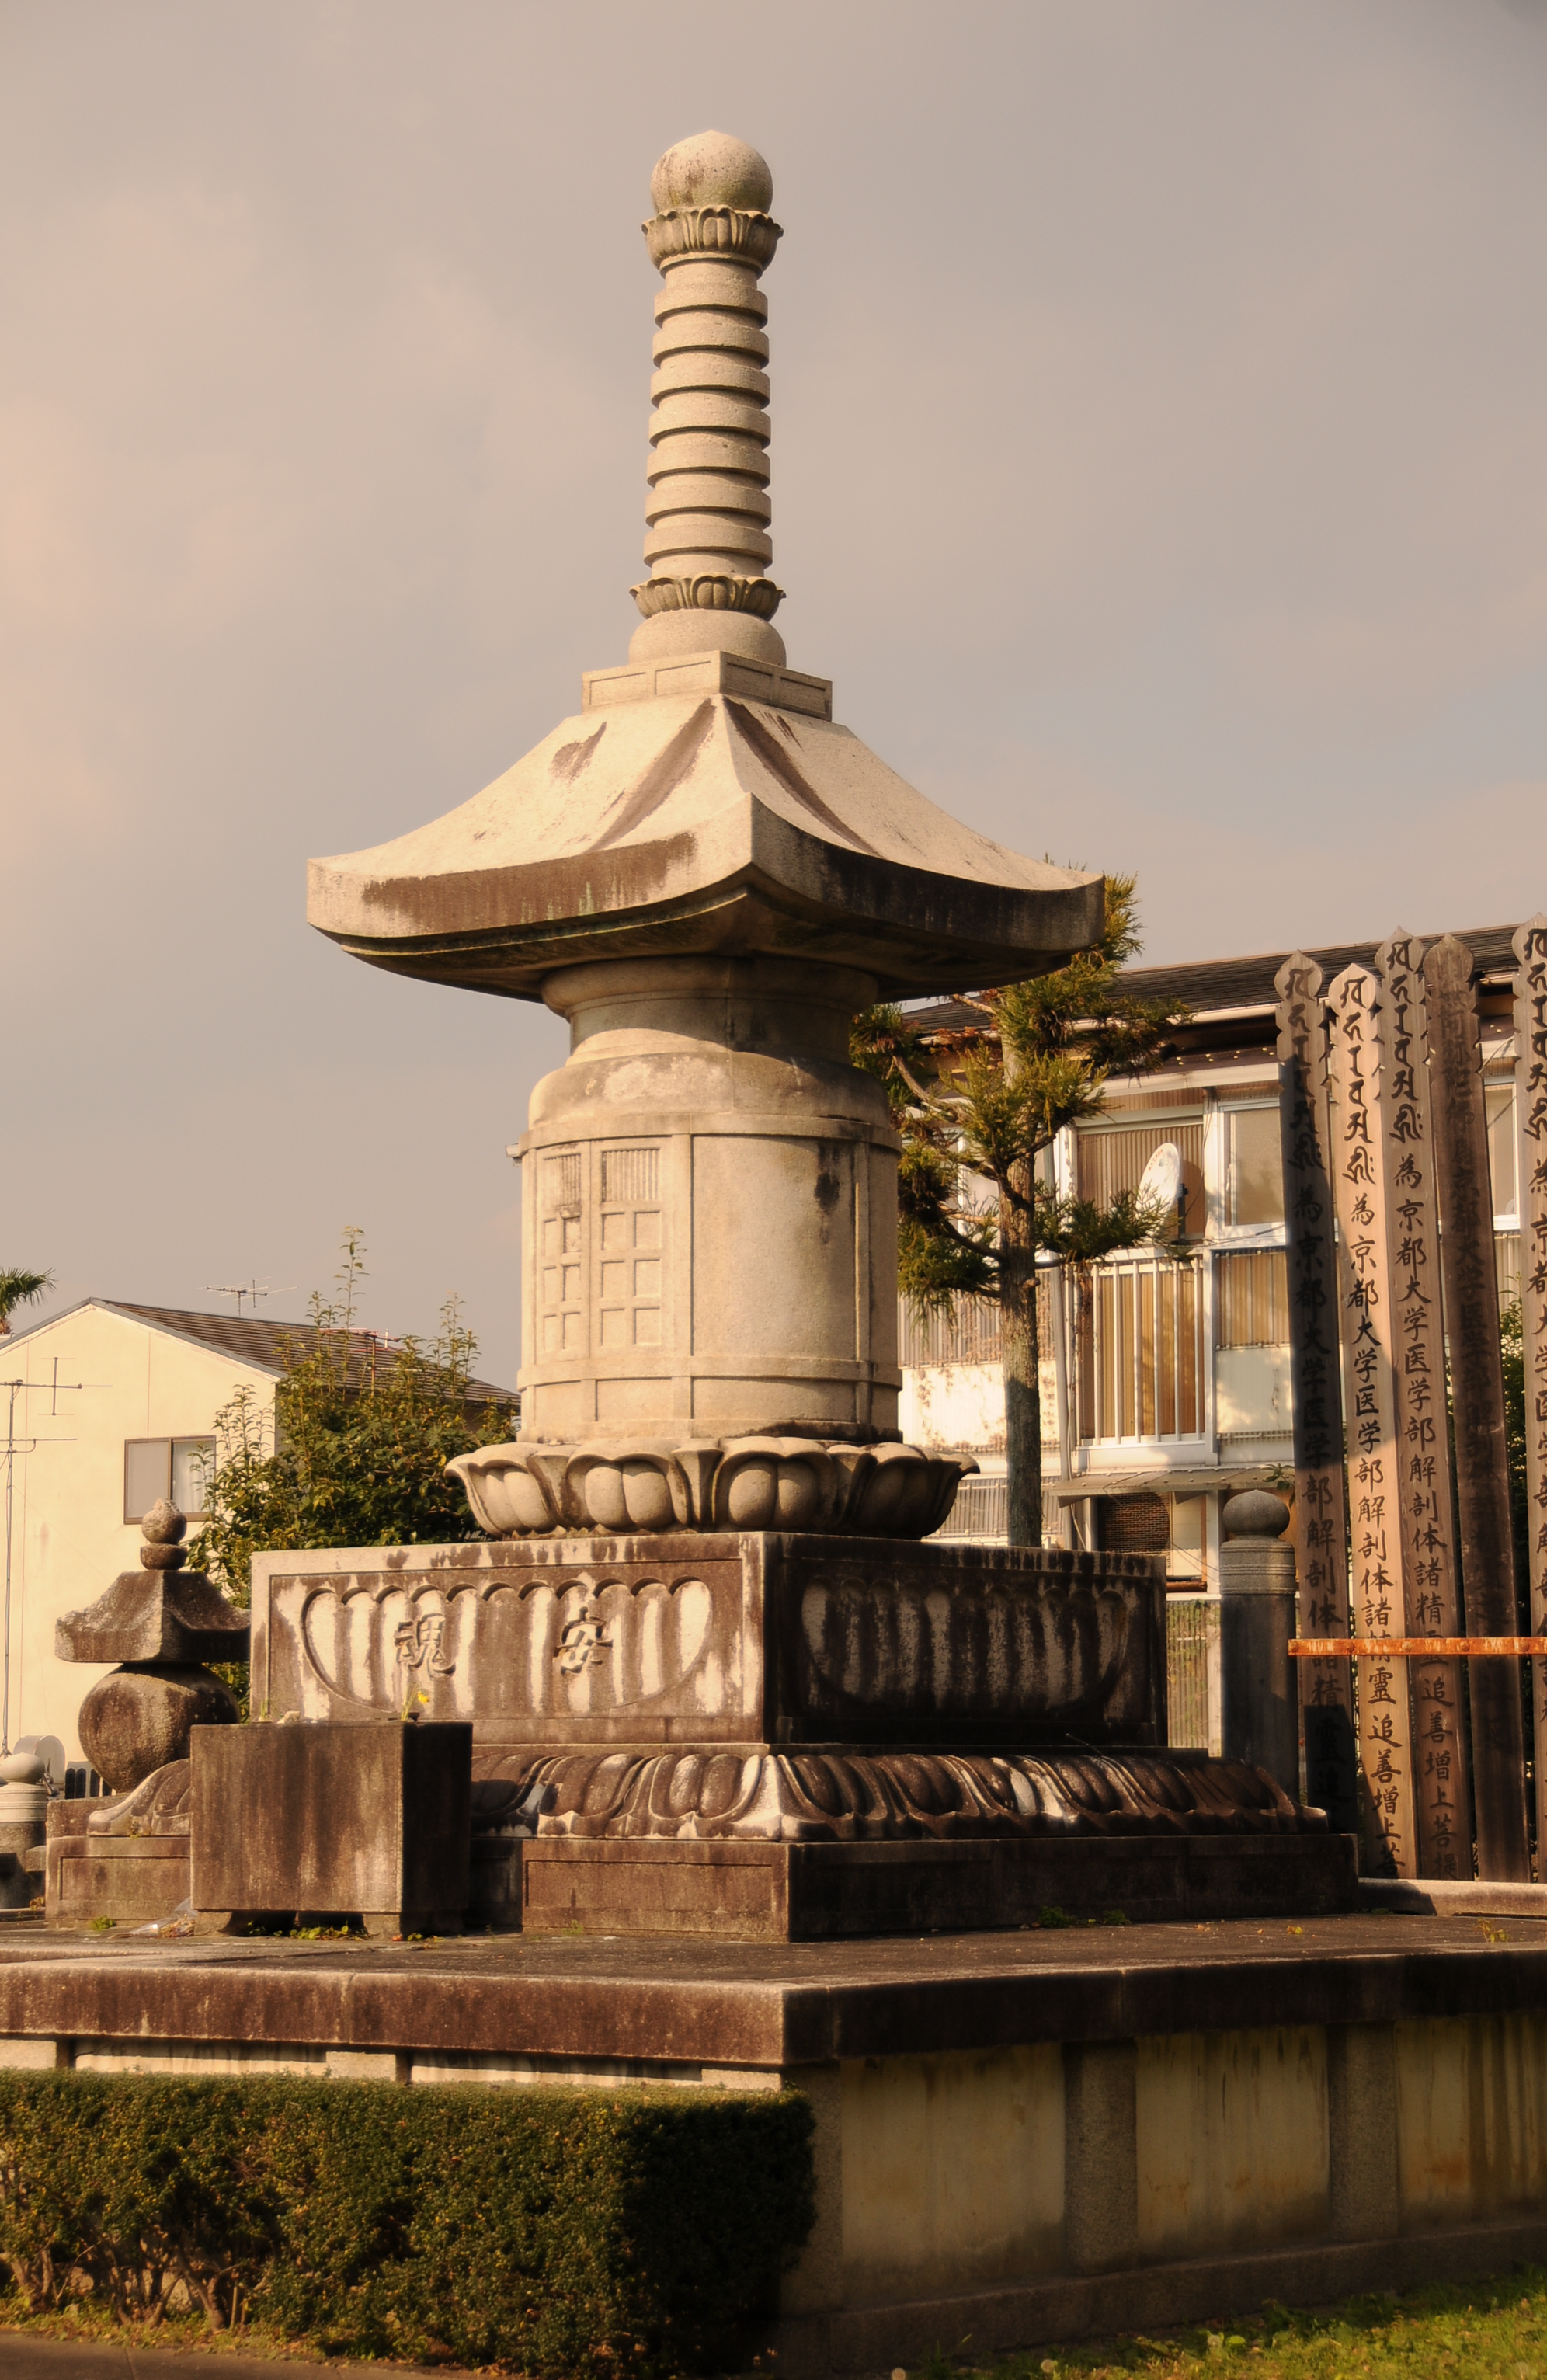 memorial/tomb of Kyodai, closer